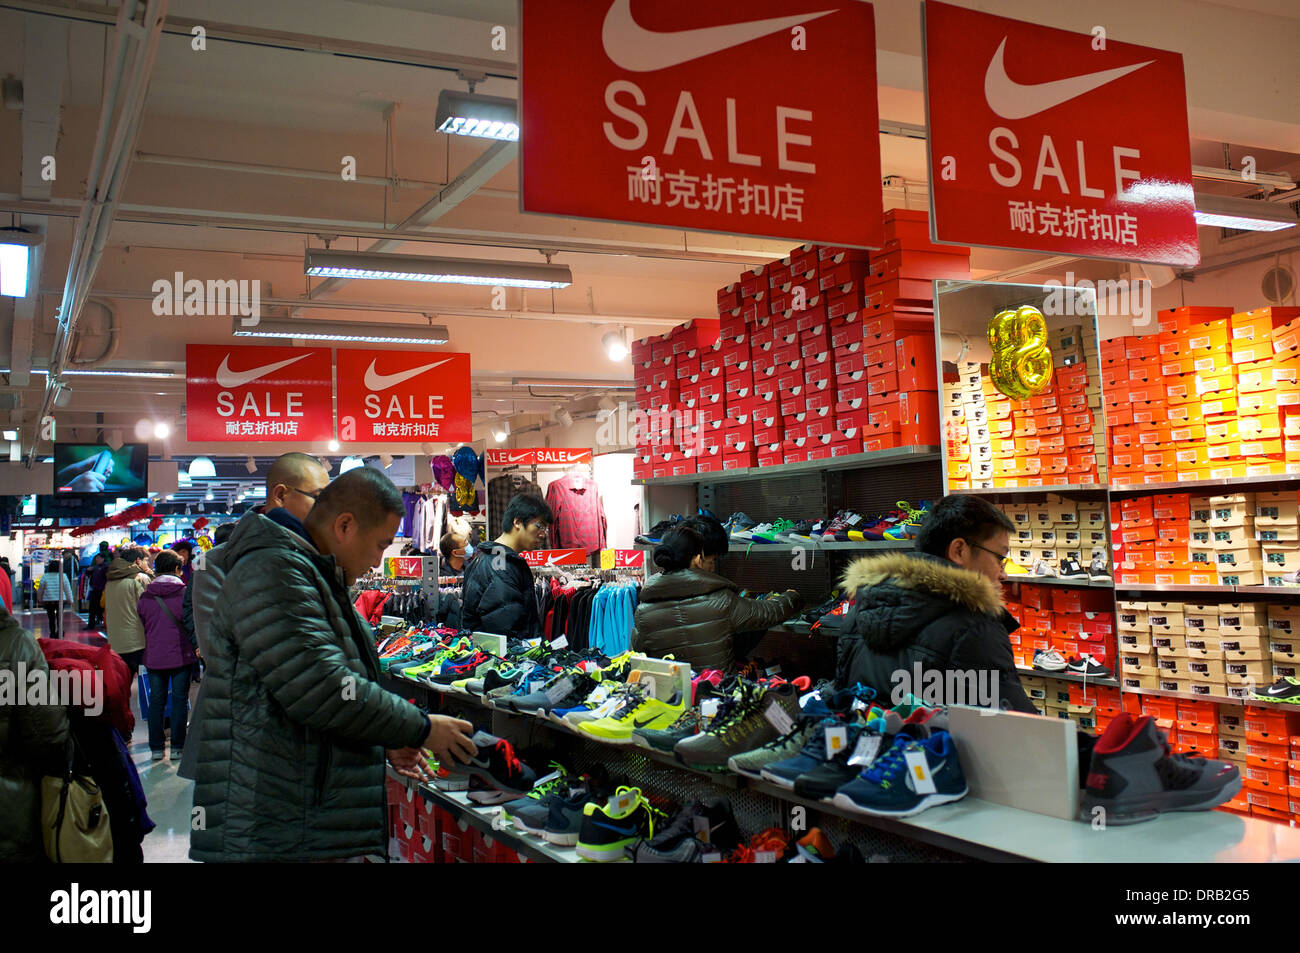 Nike store china stock photography images - Alamy